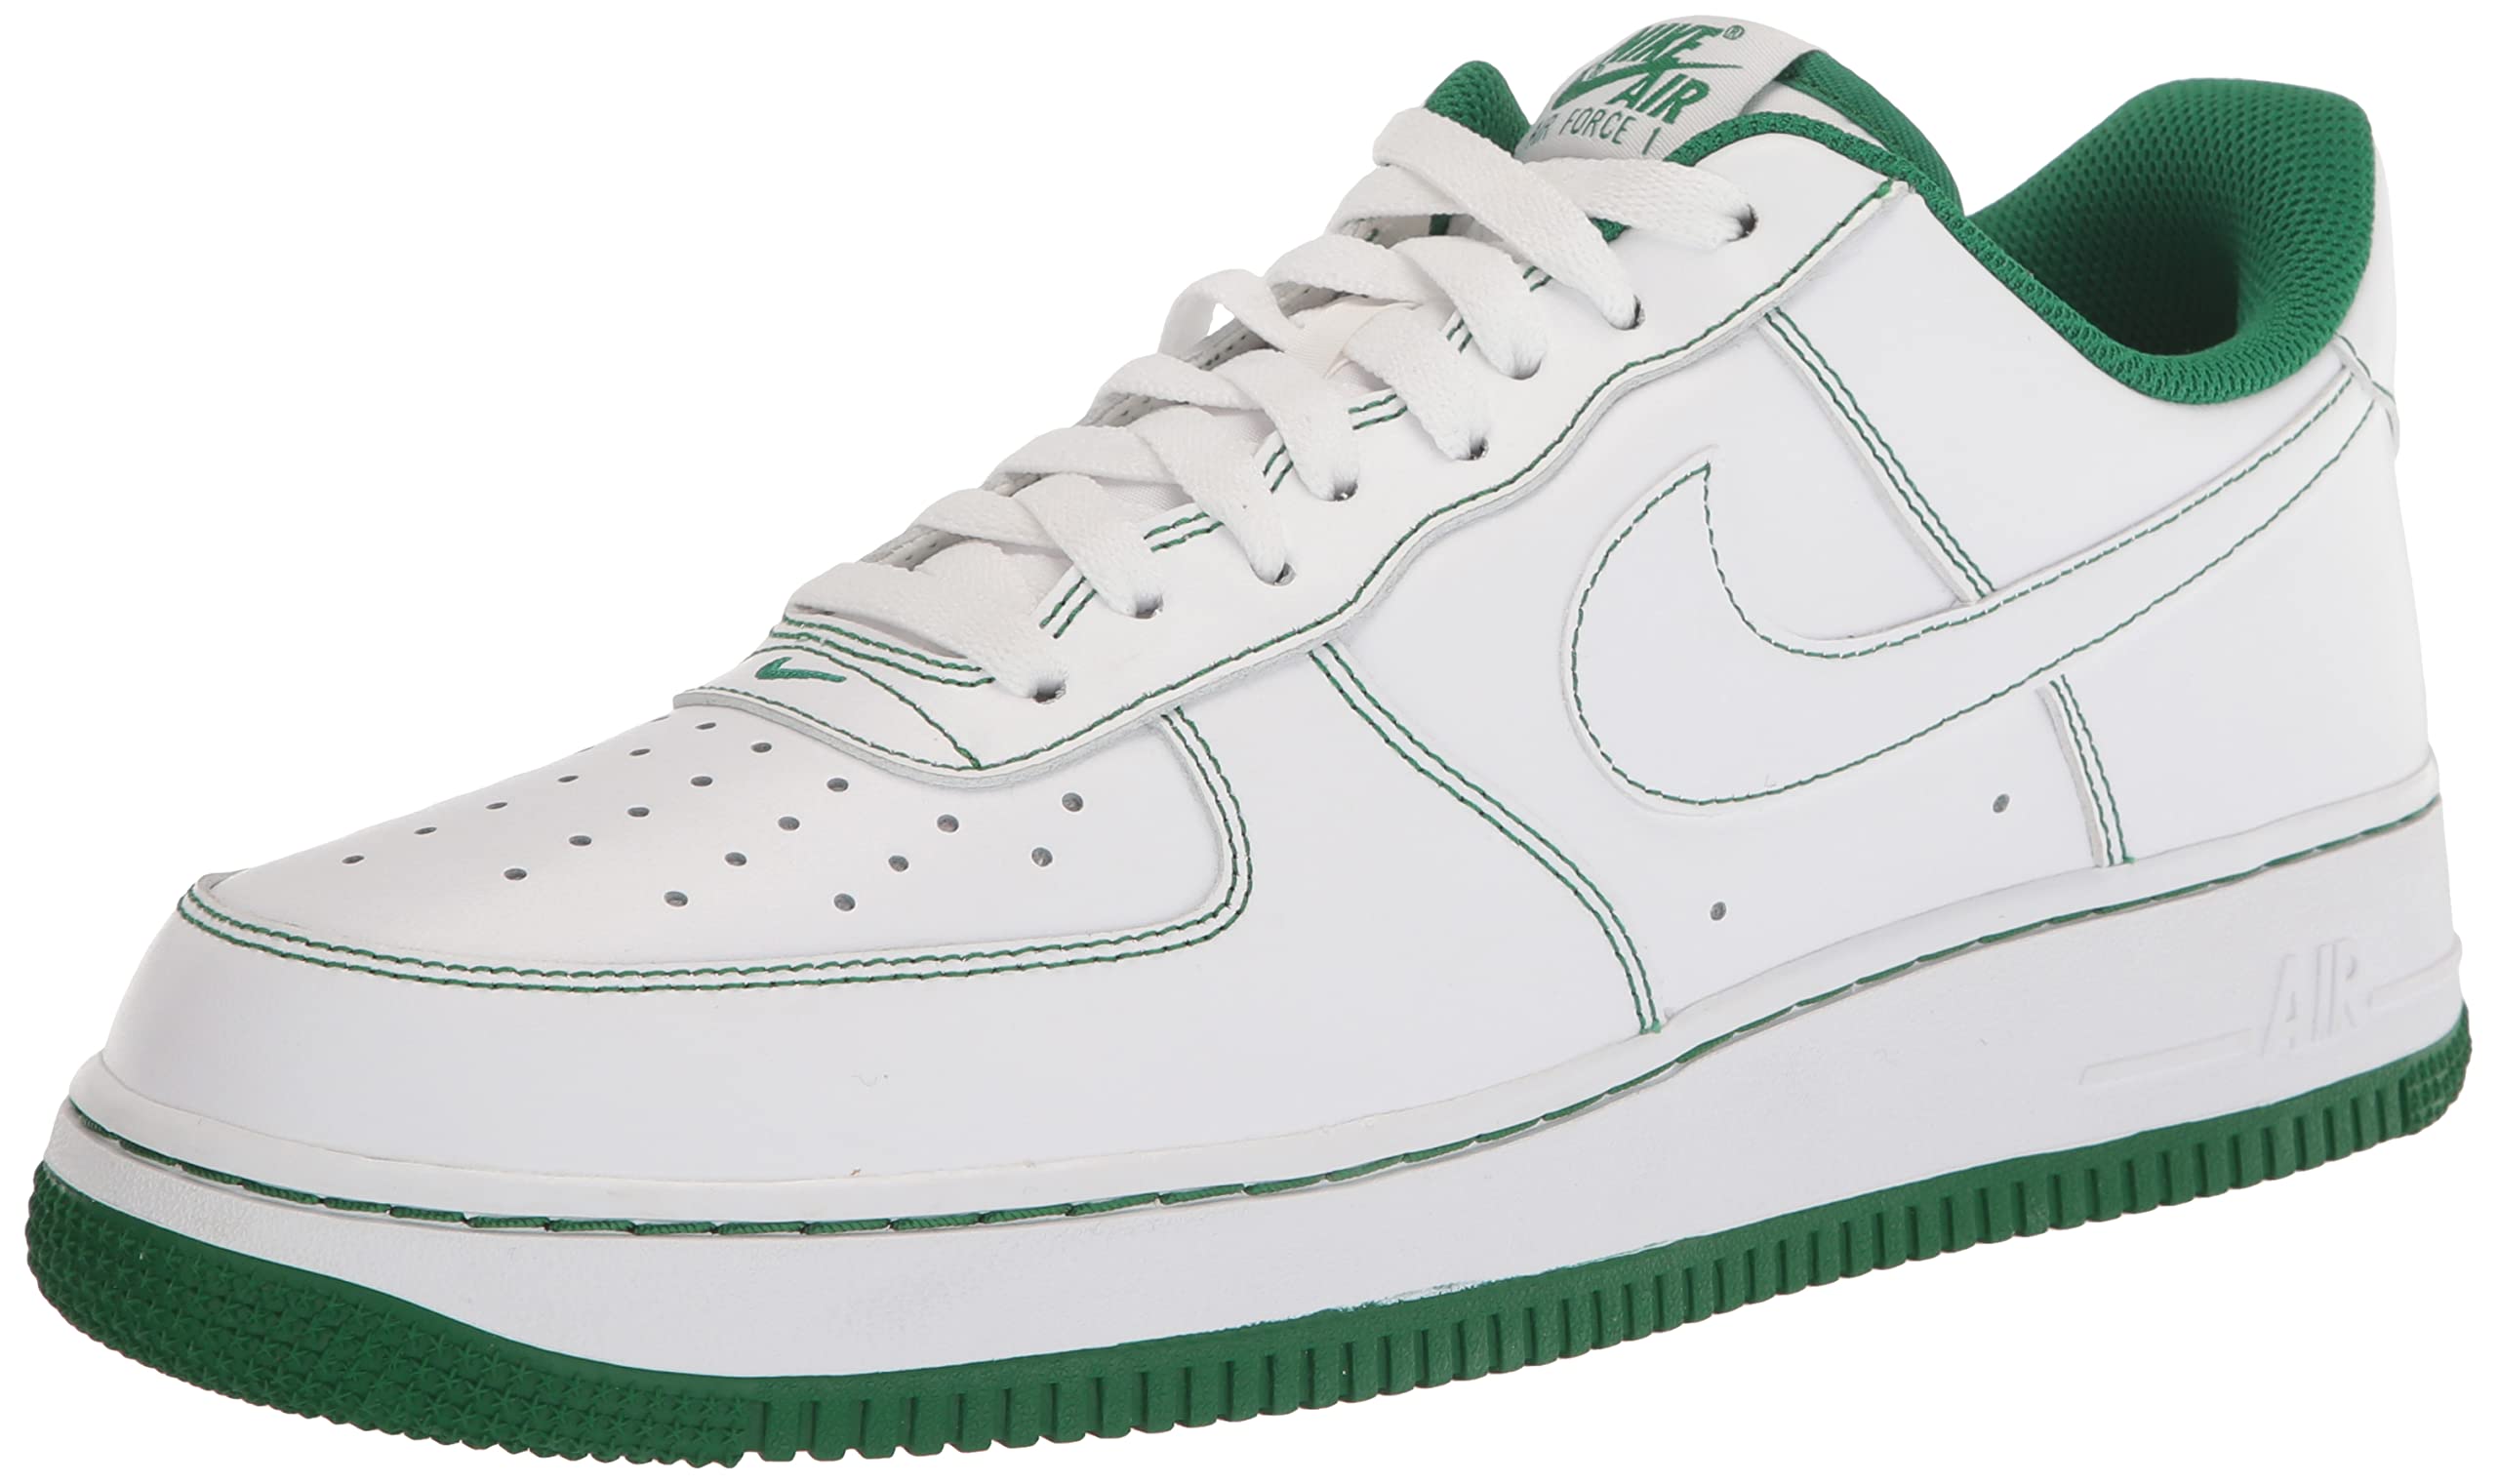 Nike Men's Low-Top Sneakers Basketball Shoe, White Pine Green, 11